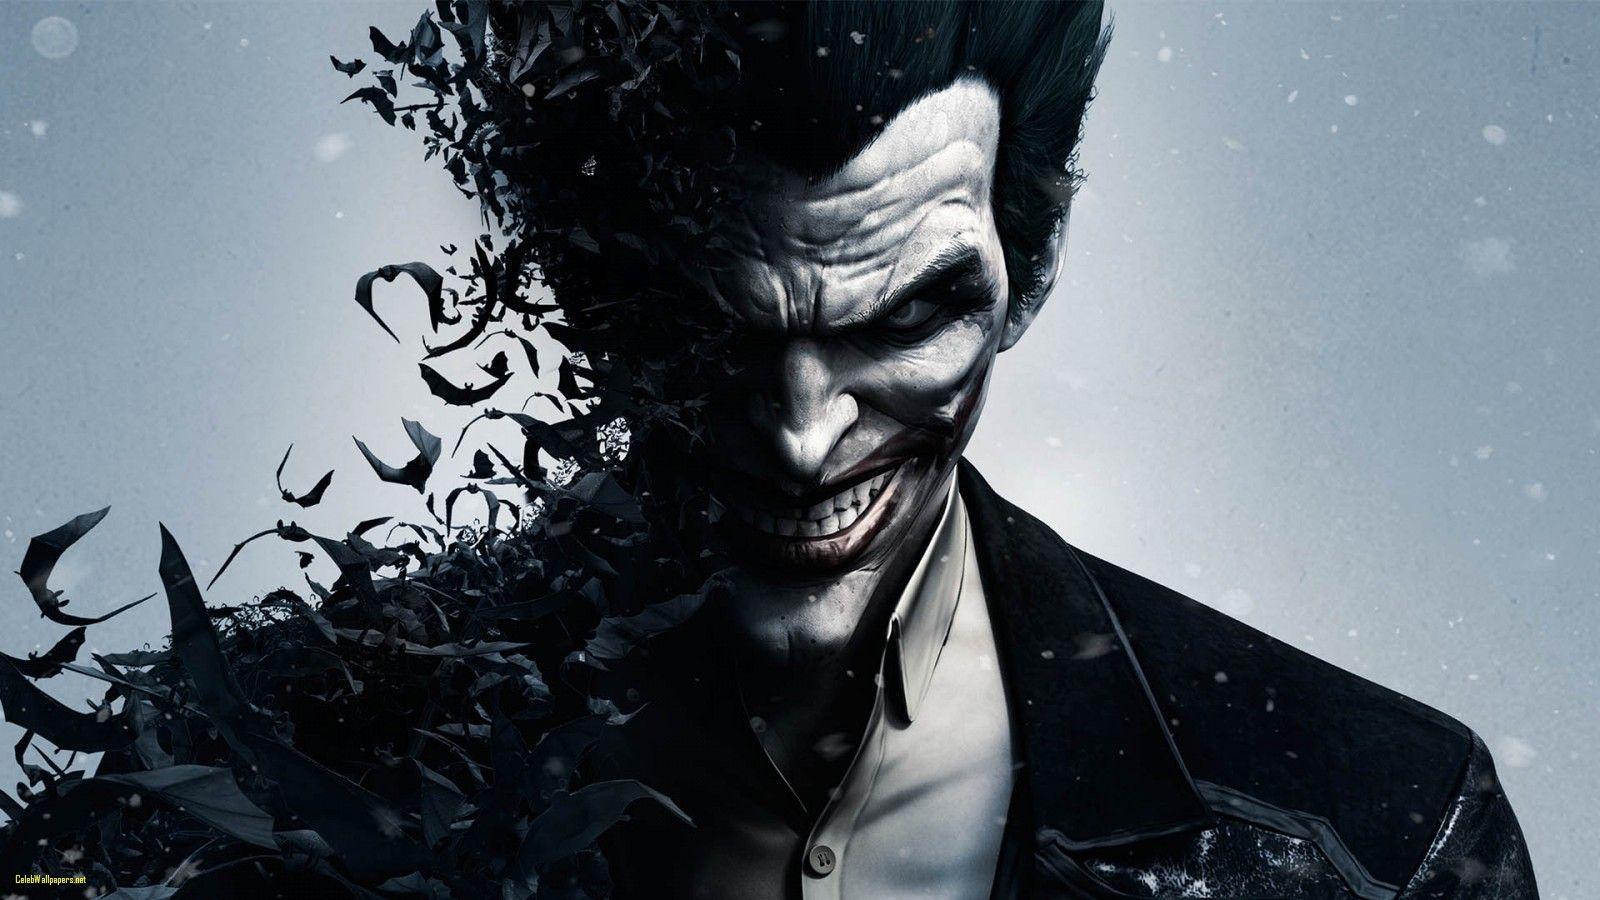  Epic  Joker  Wallpapers  Top Free Epic  Joker  Backgrounds  